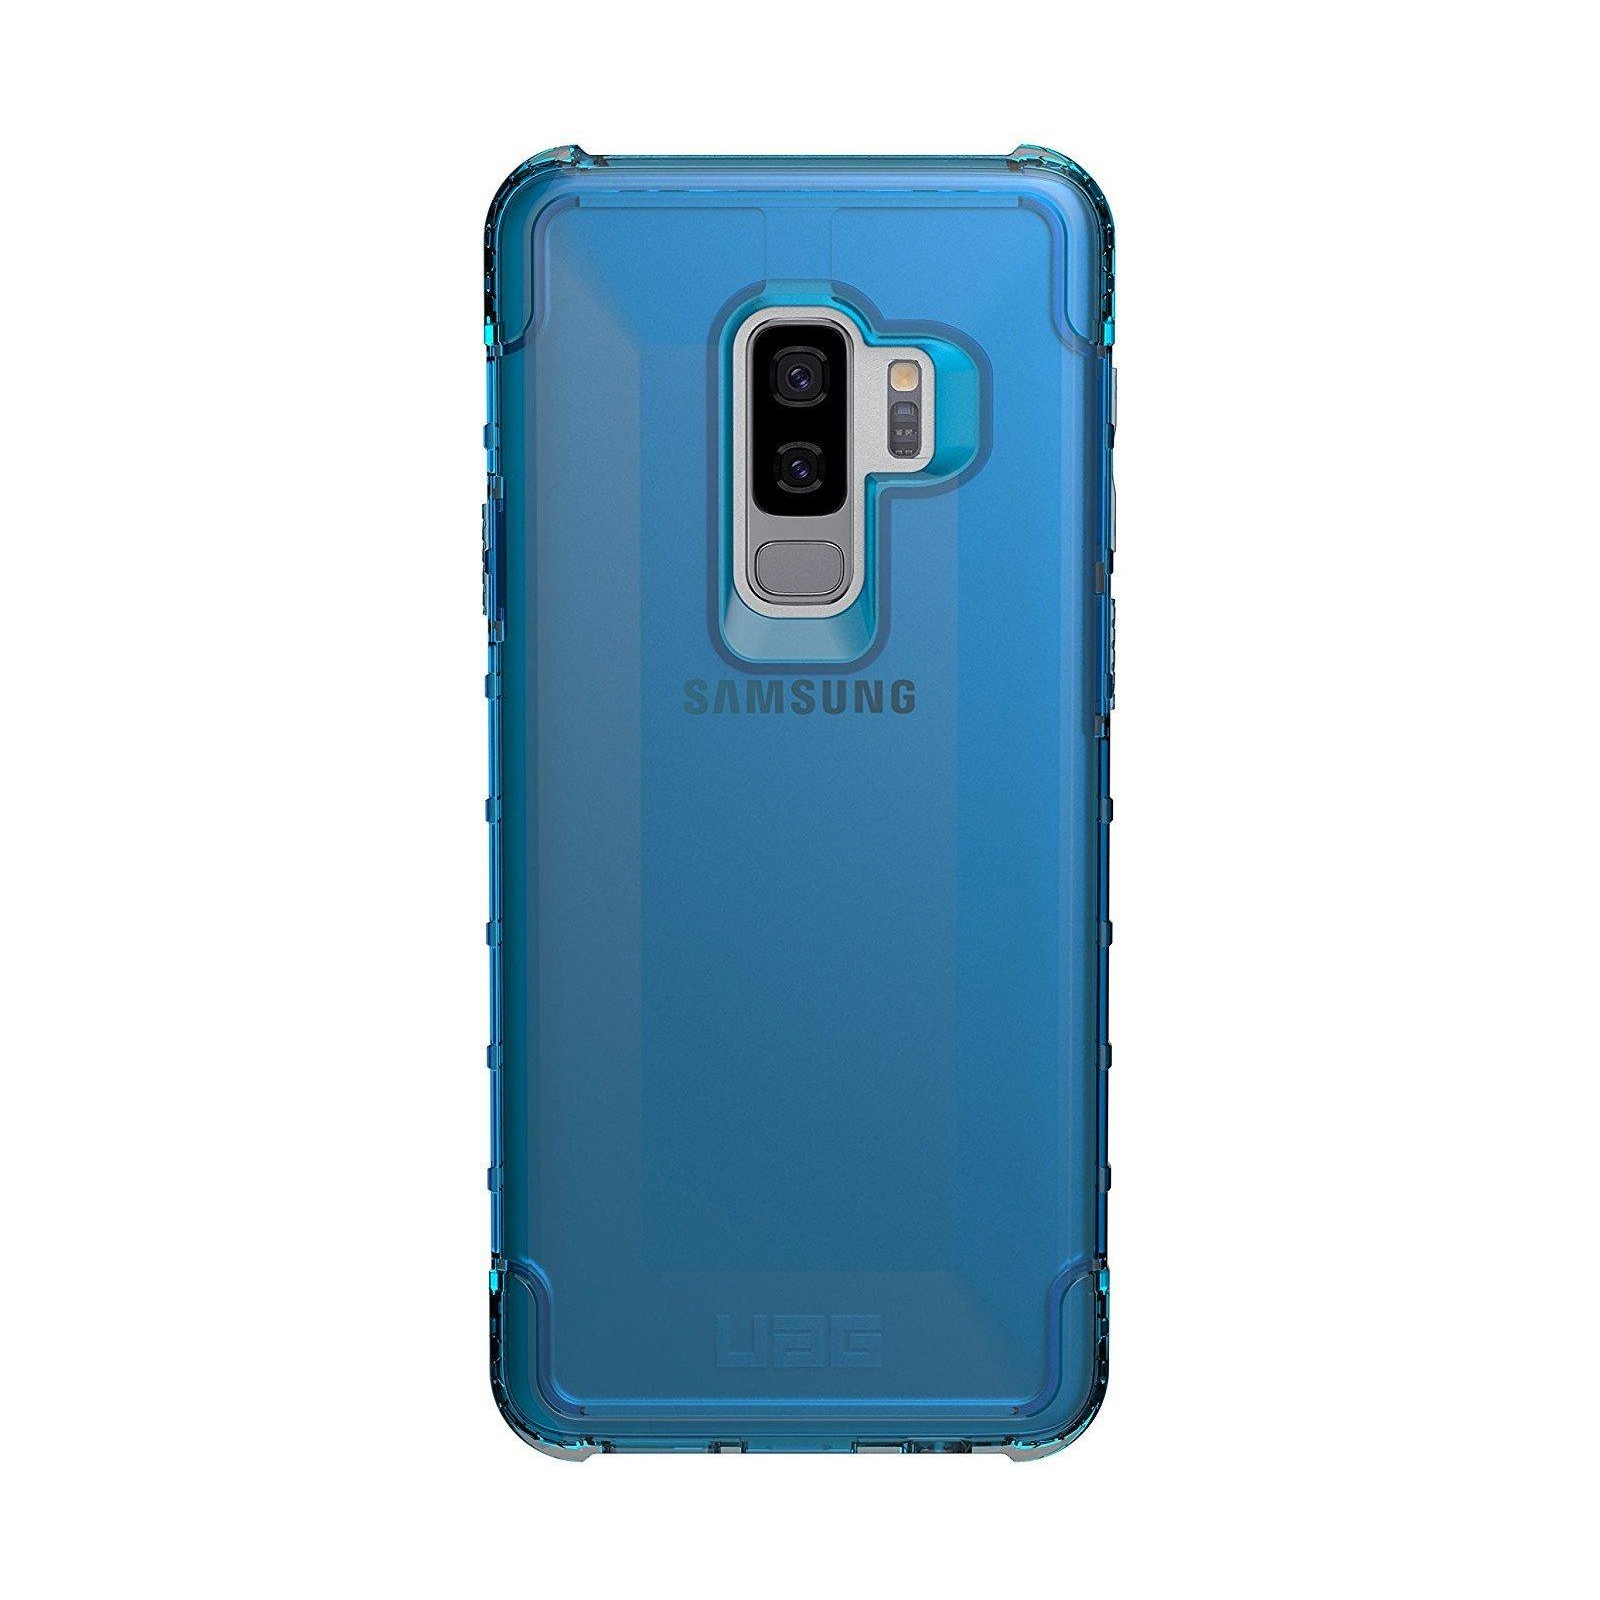 Чехол для мобильного телефона UAG Galaxy S9+ Plyo Glacier (GLXS9PLS-Y-GL)